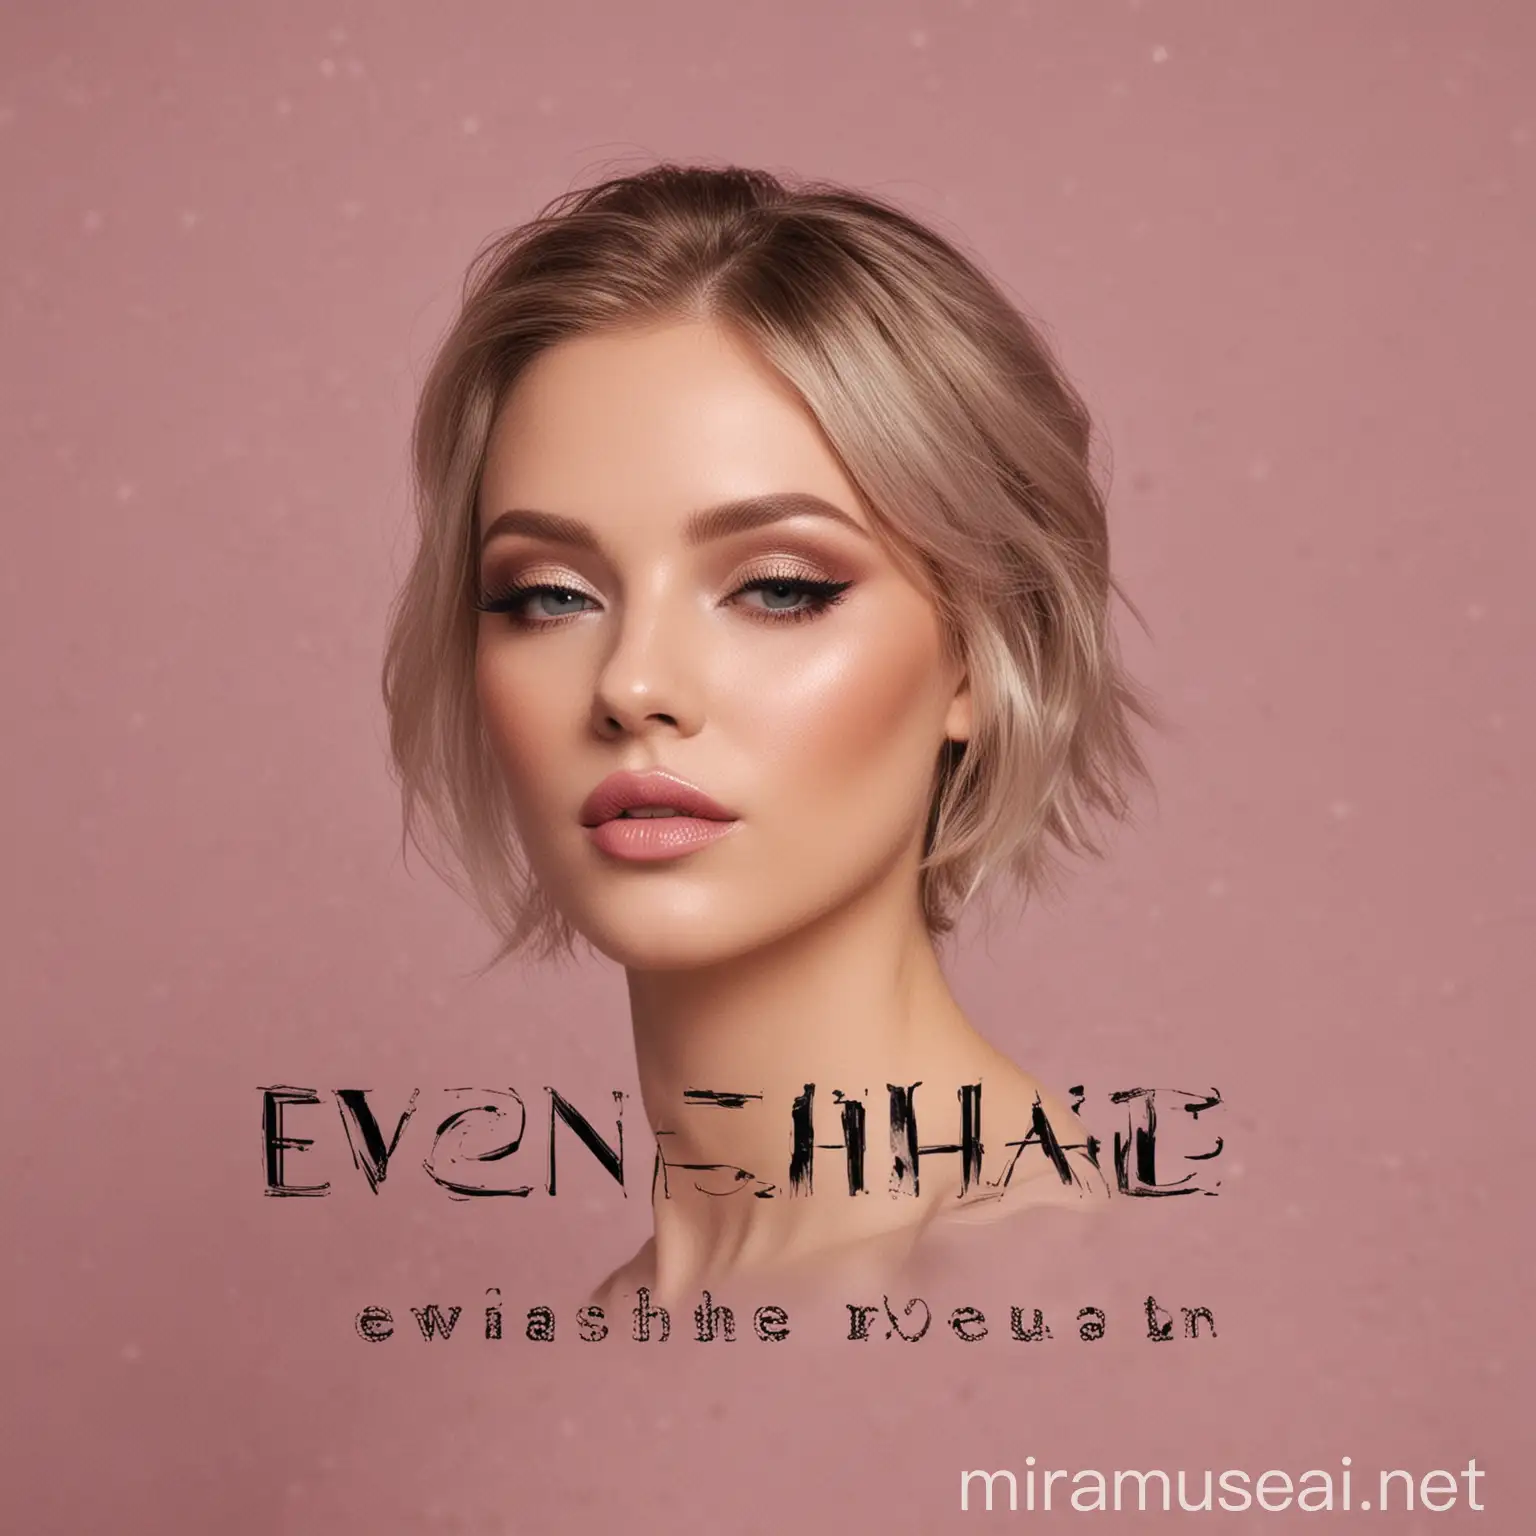 EVEnShade Brand Makeup Collection Advertisement